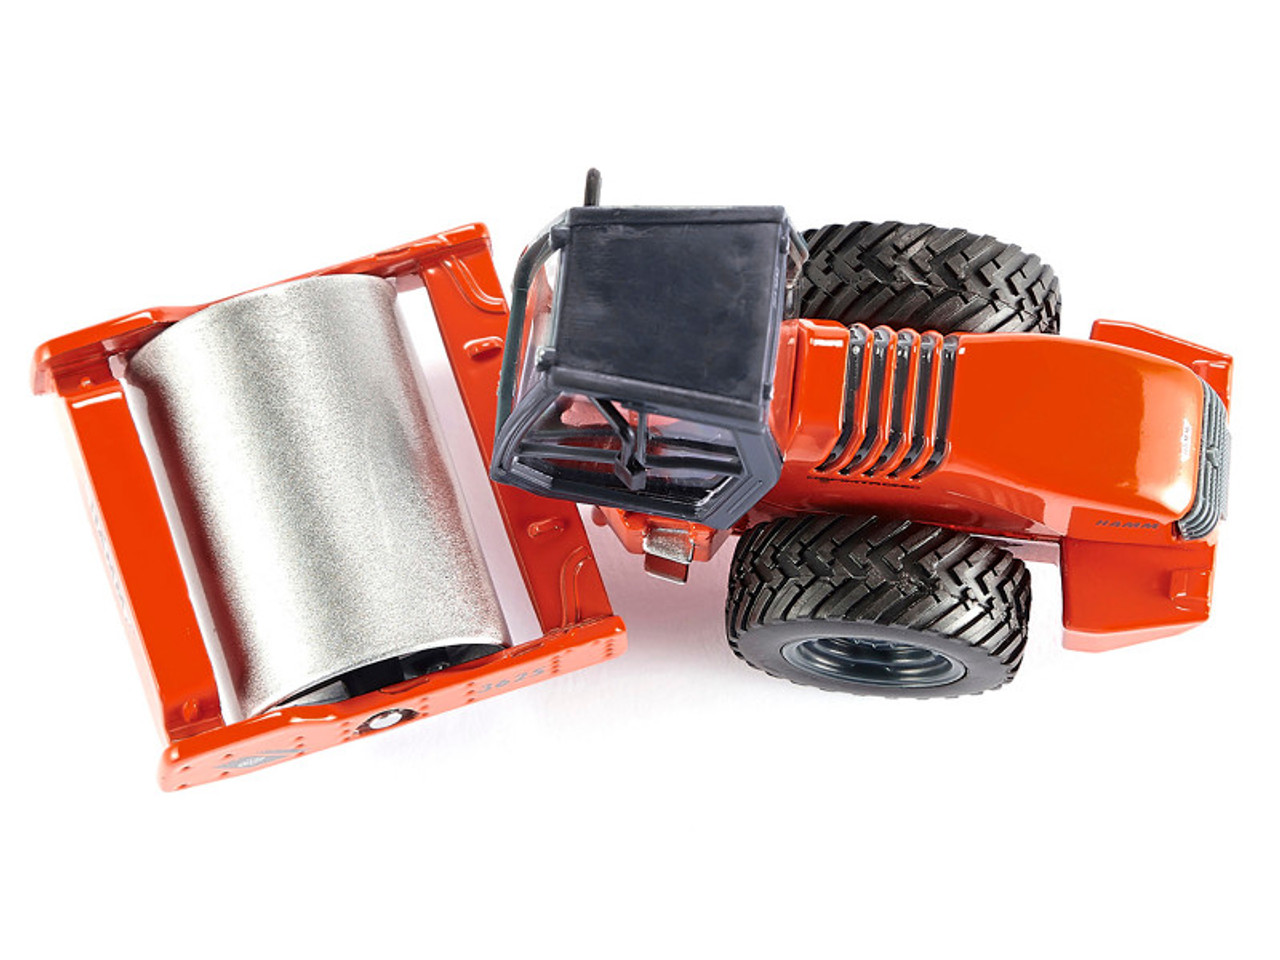 Hamm 3625 Compactor Orange 1/50 Diecast Model by Siku